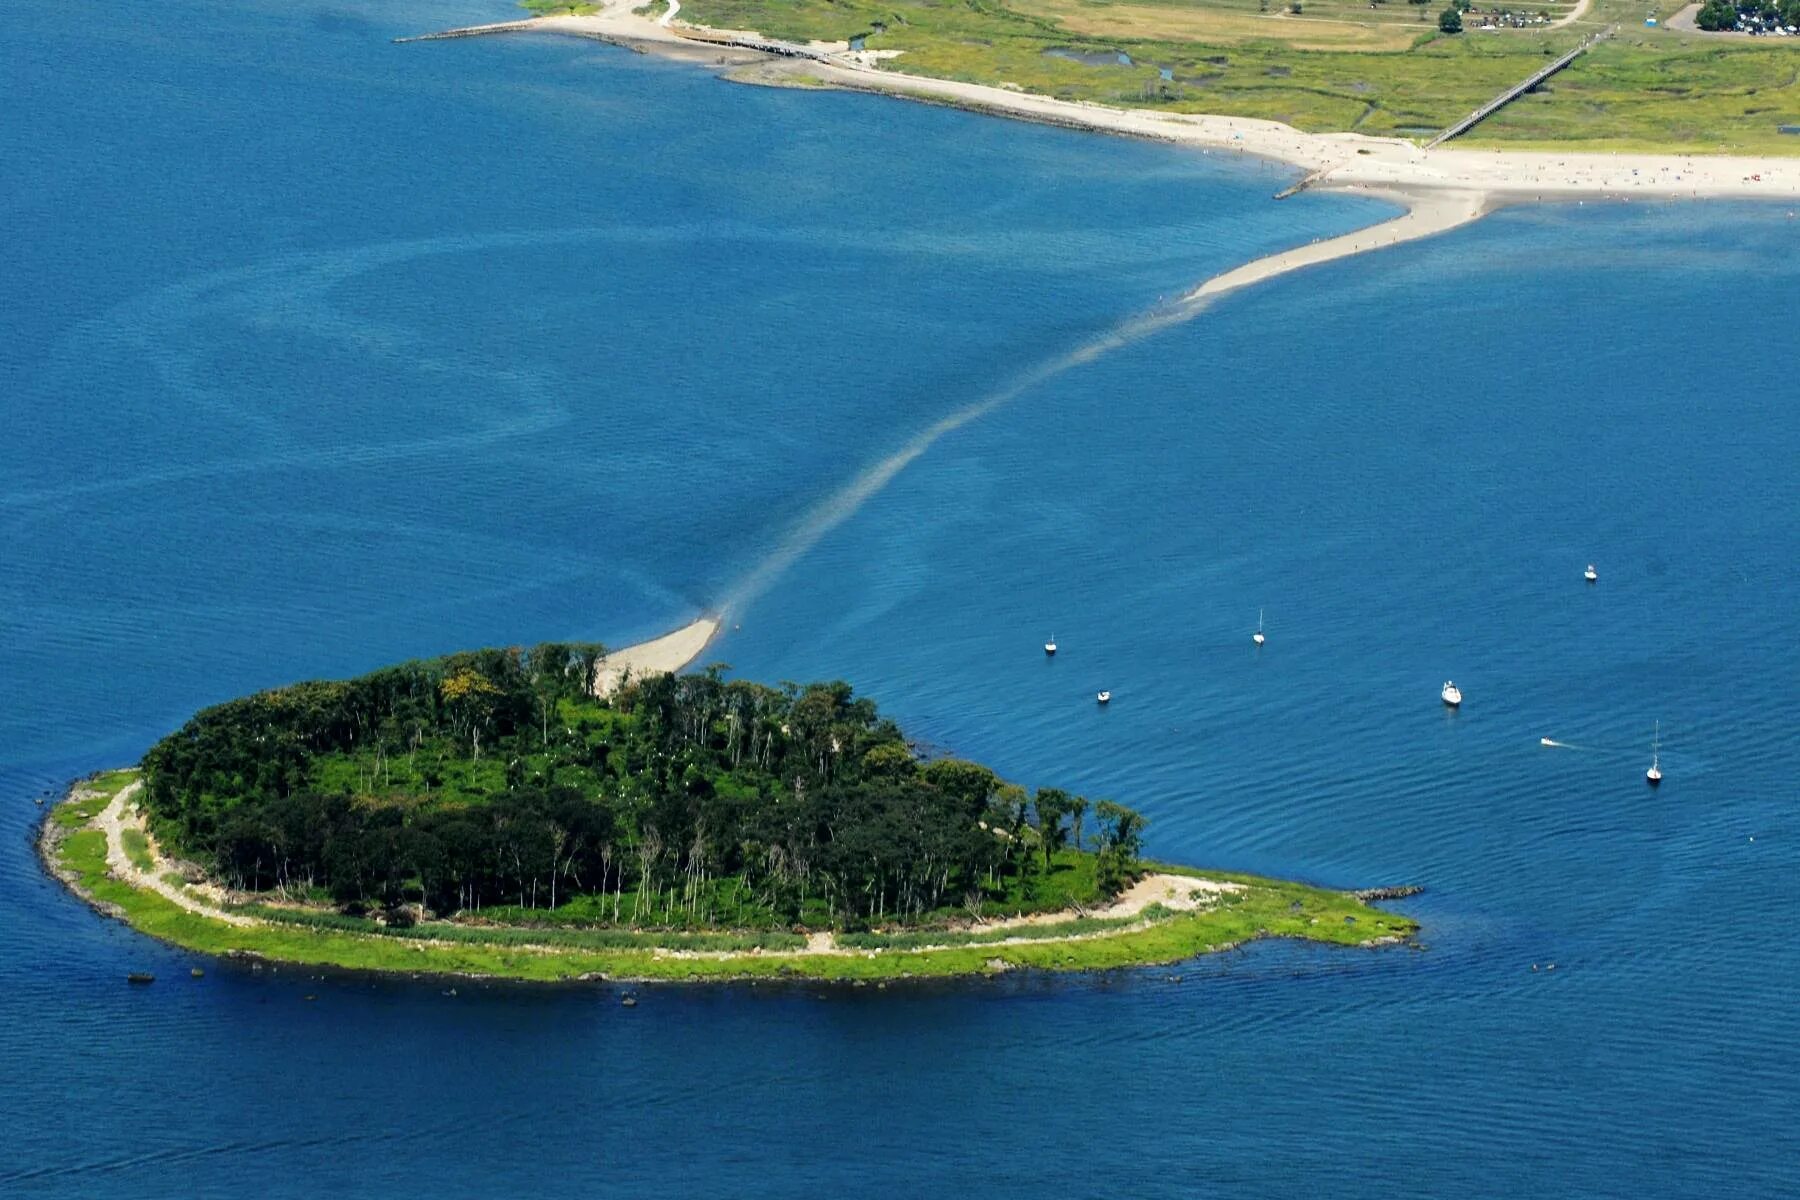 An island off the coast